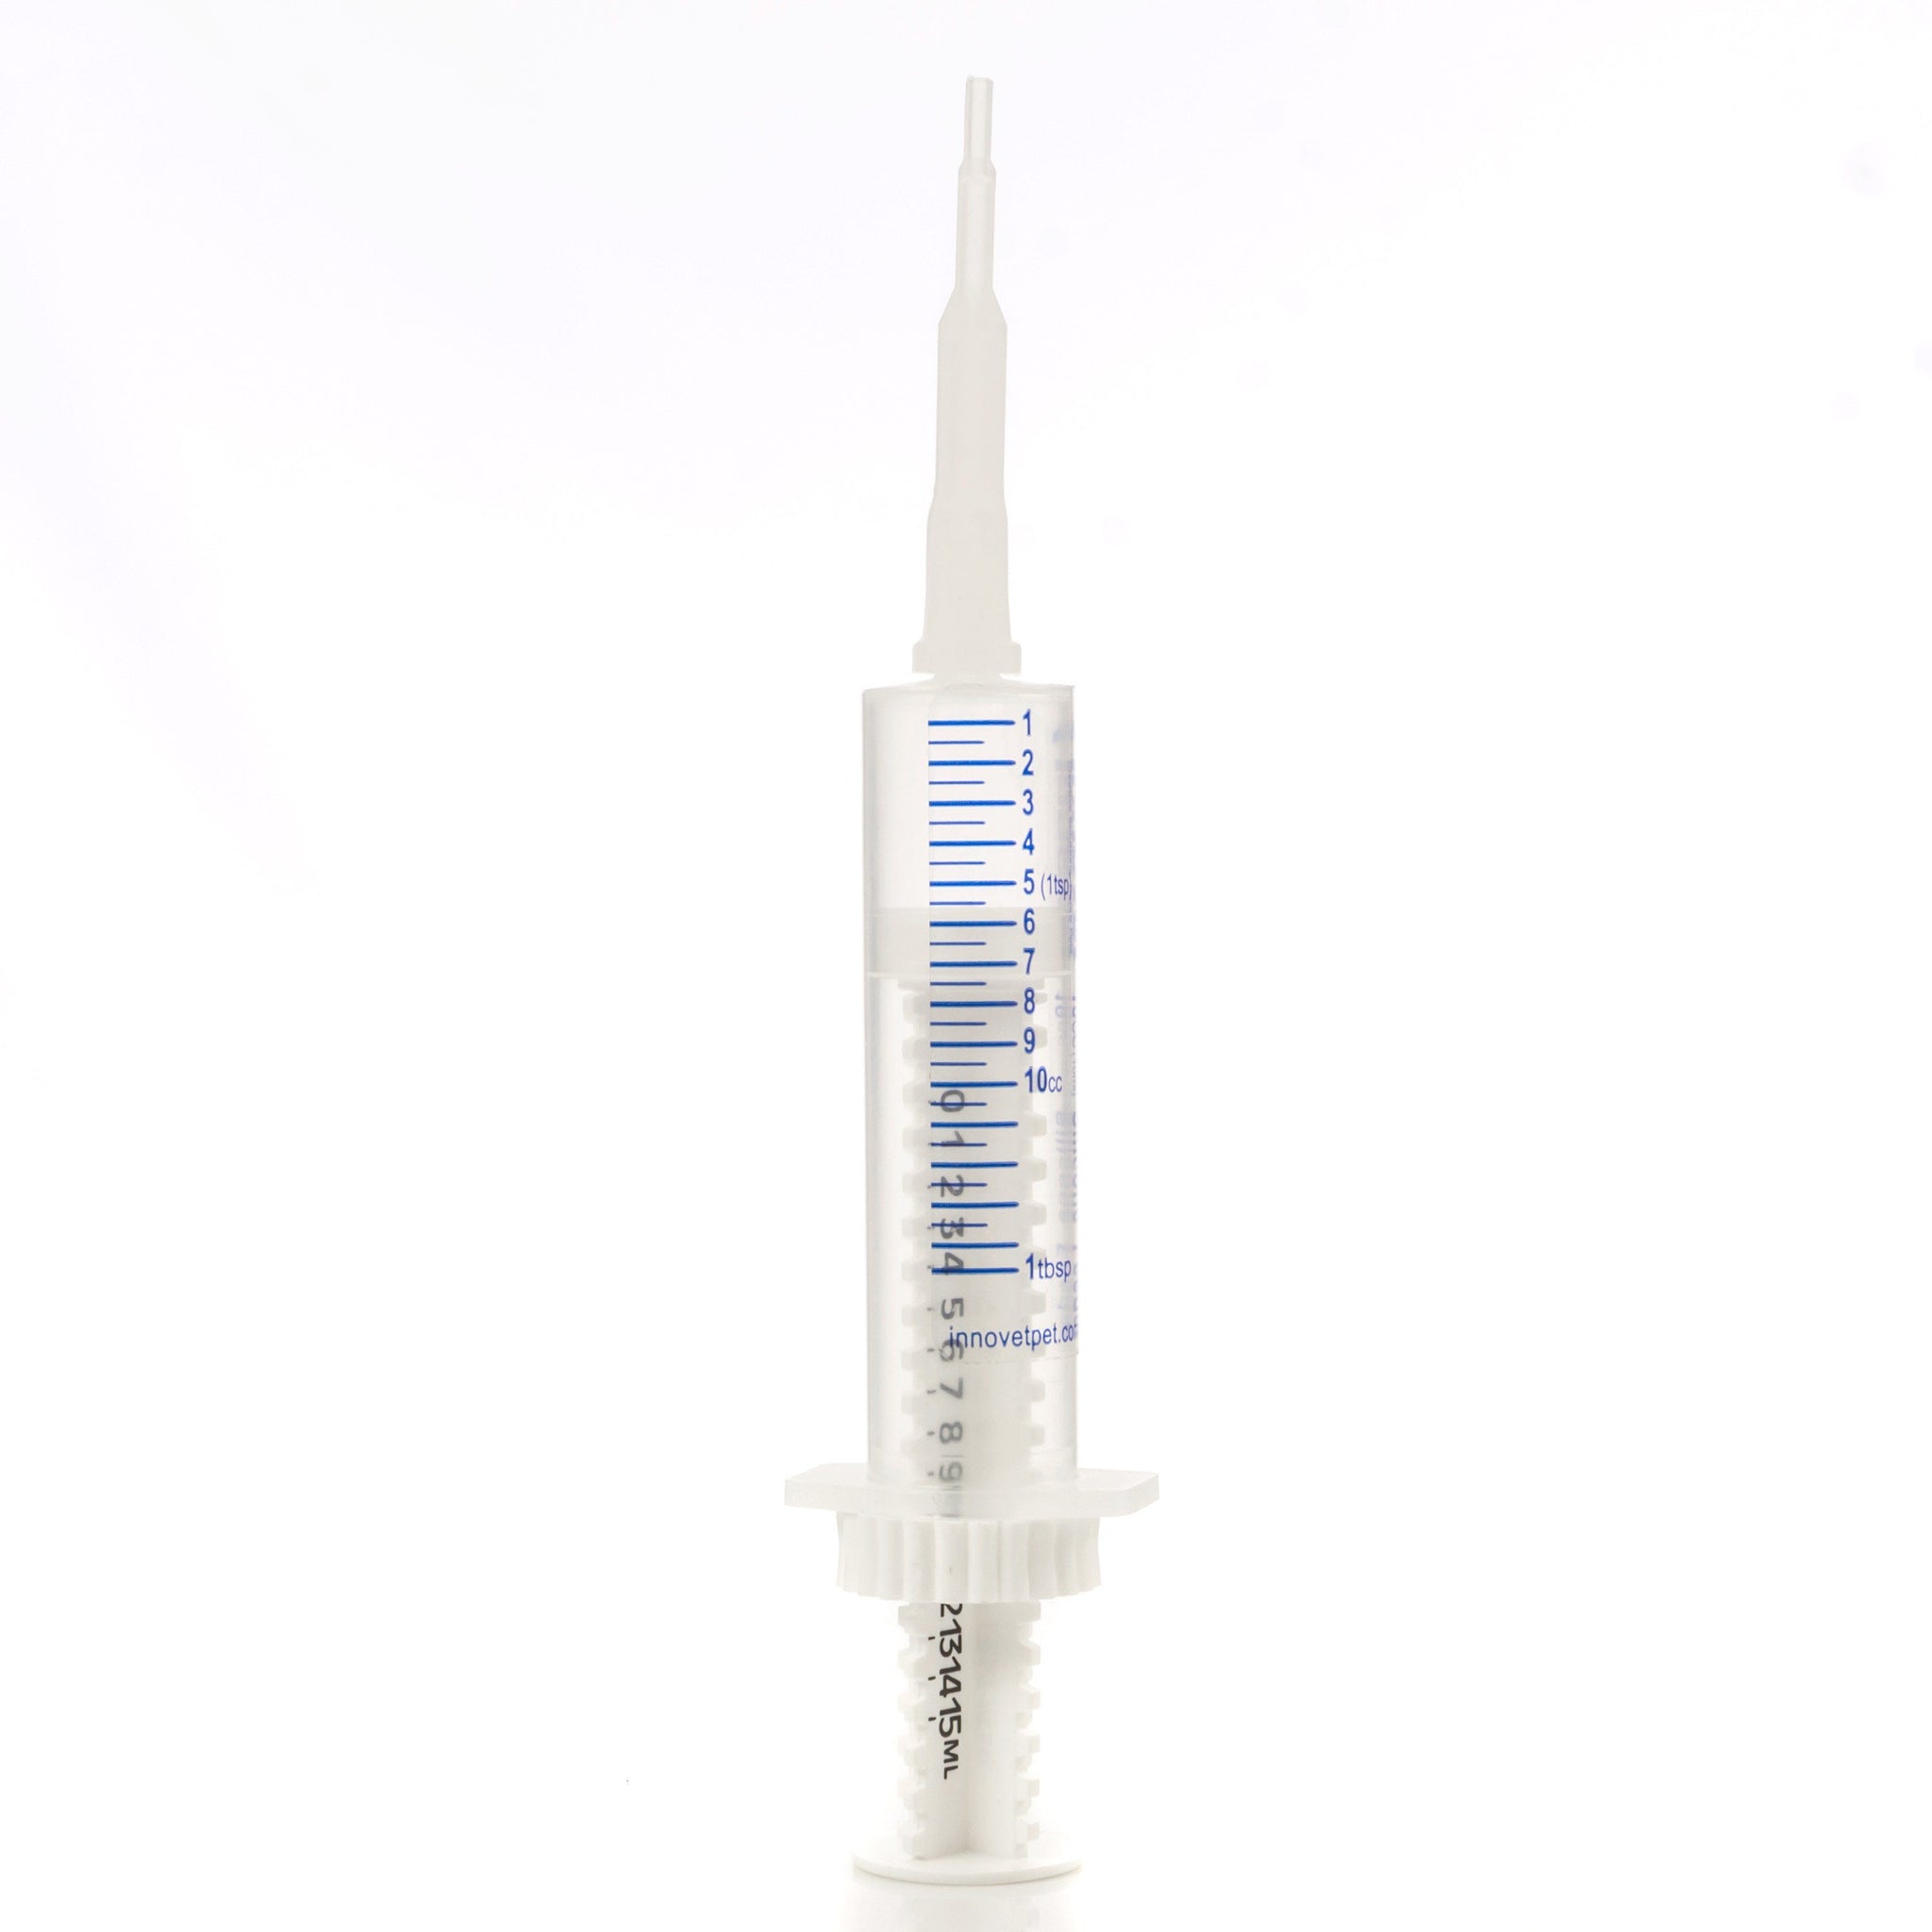 Buy Silicone Tipped Soft Feeding Syringes – Innovet Pet